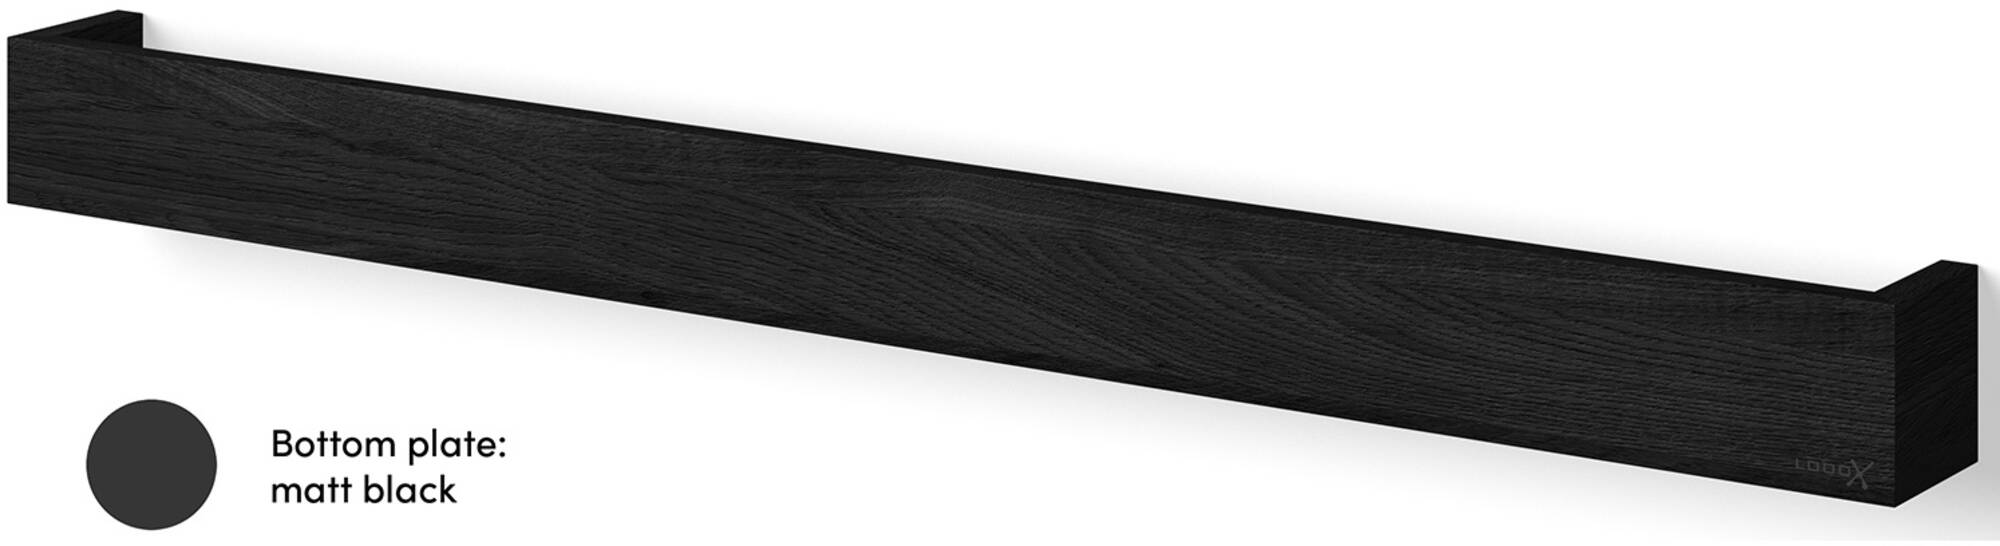 Looox Wooden Shelf BoX Wandplank 120x10x10 cm Black